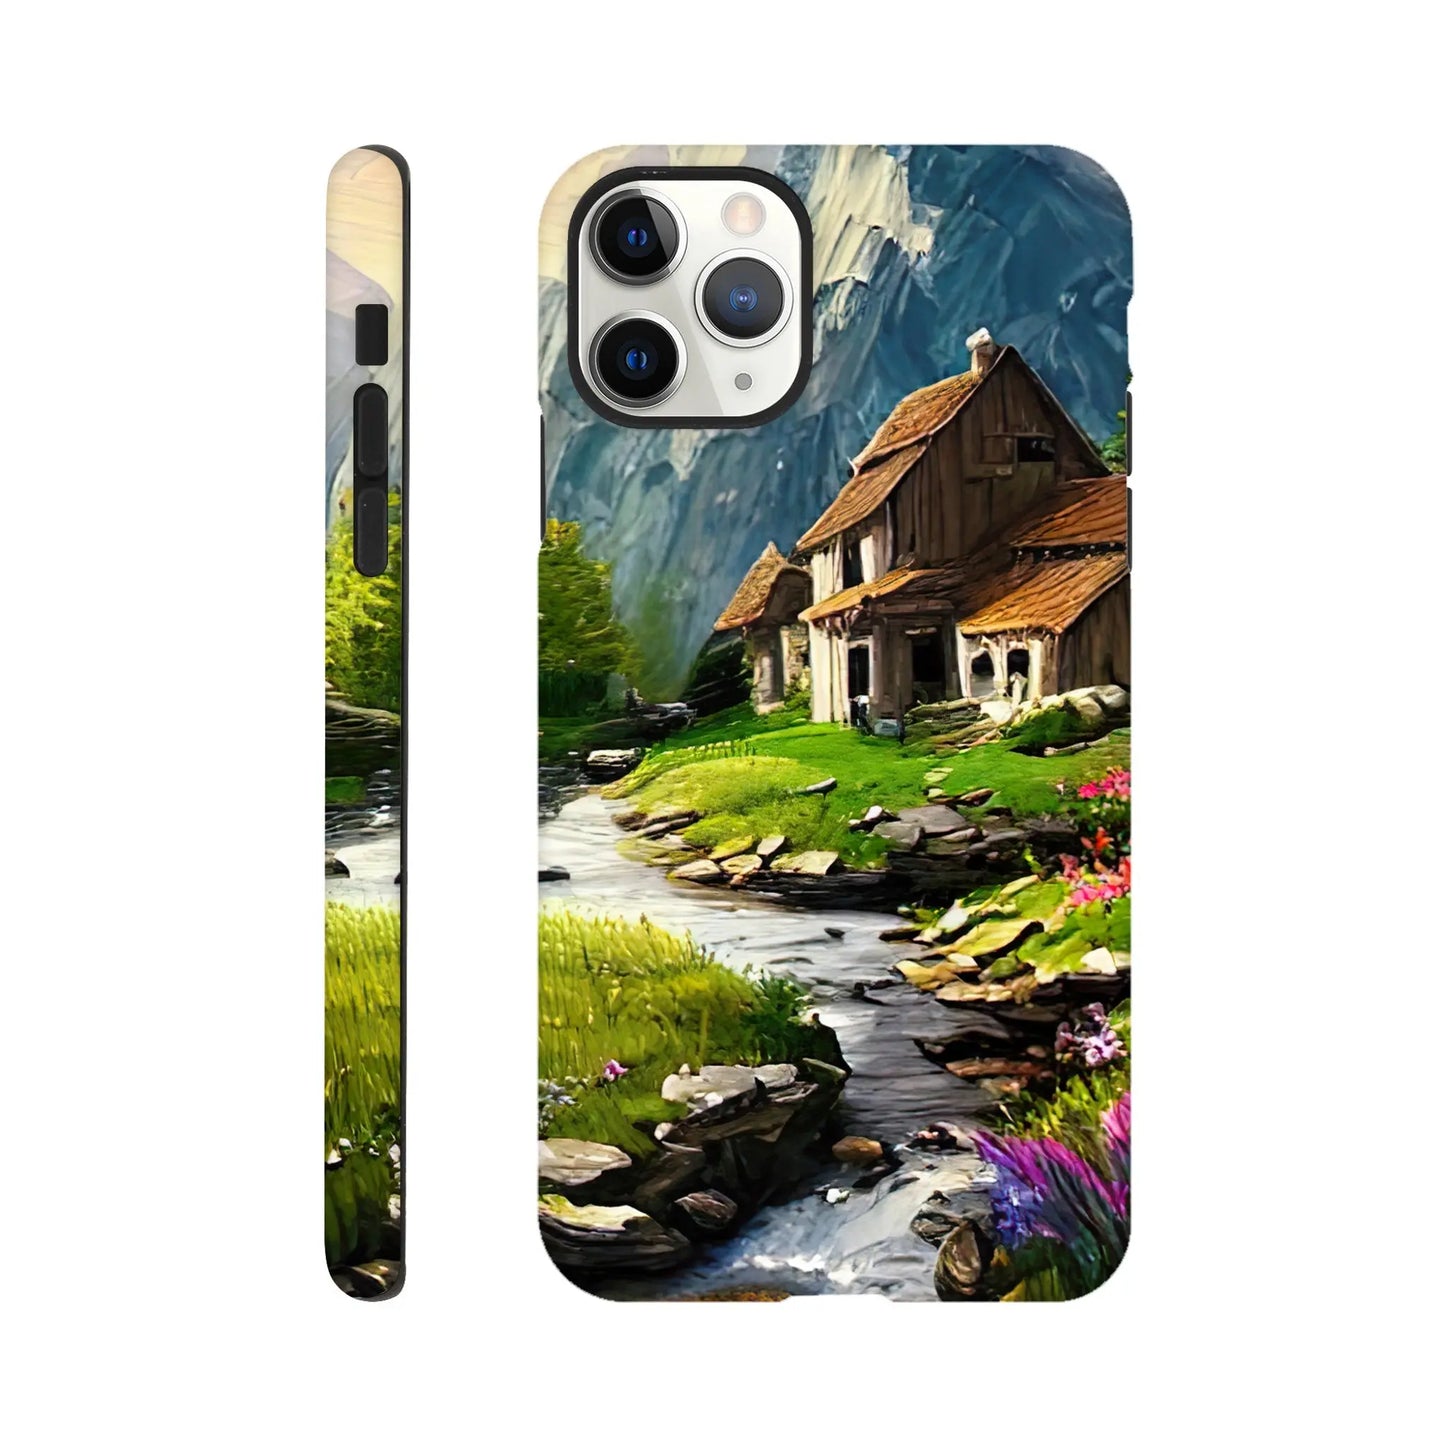 Smartphone-Hülle "Hart" - Berglandschaft - Malerischer Stil, KI-Kunst RolConArt, Landschaften, iPhone-11-Pro-Max